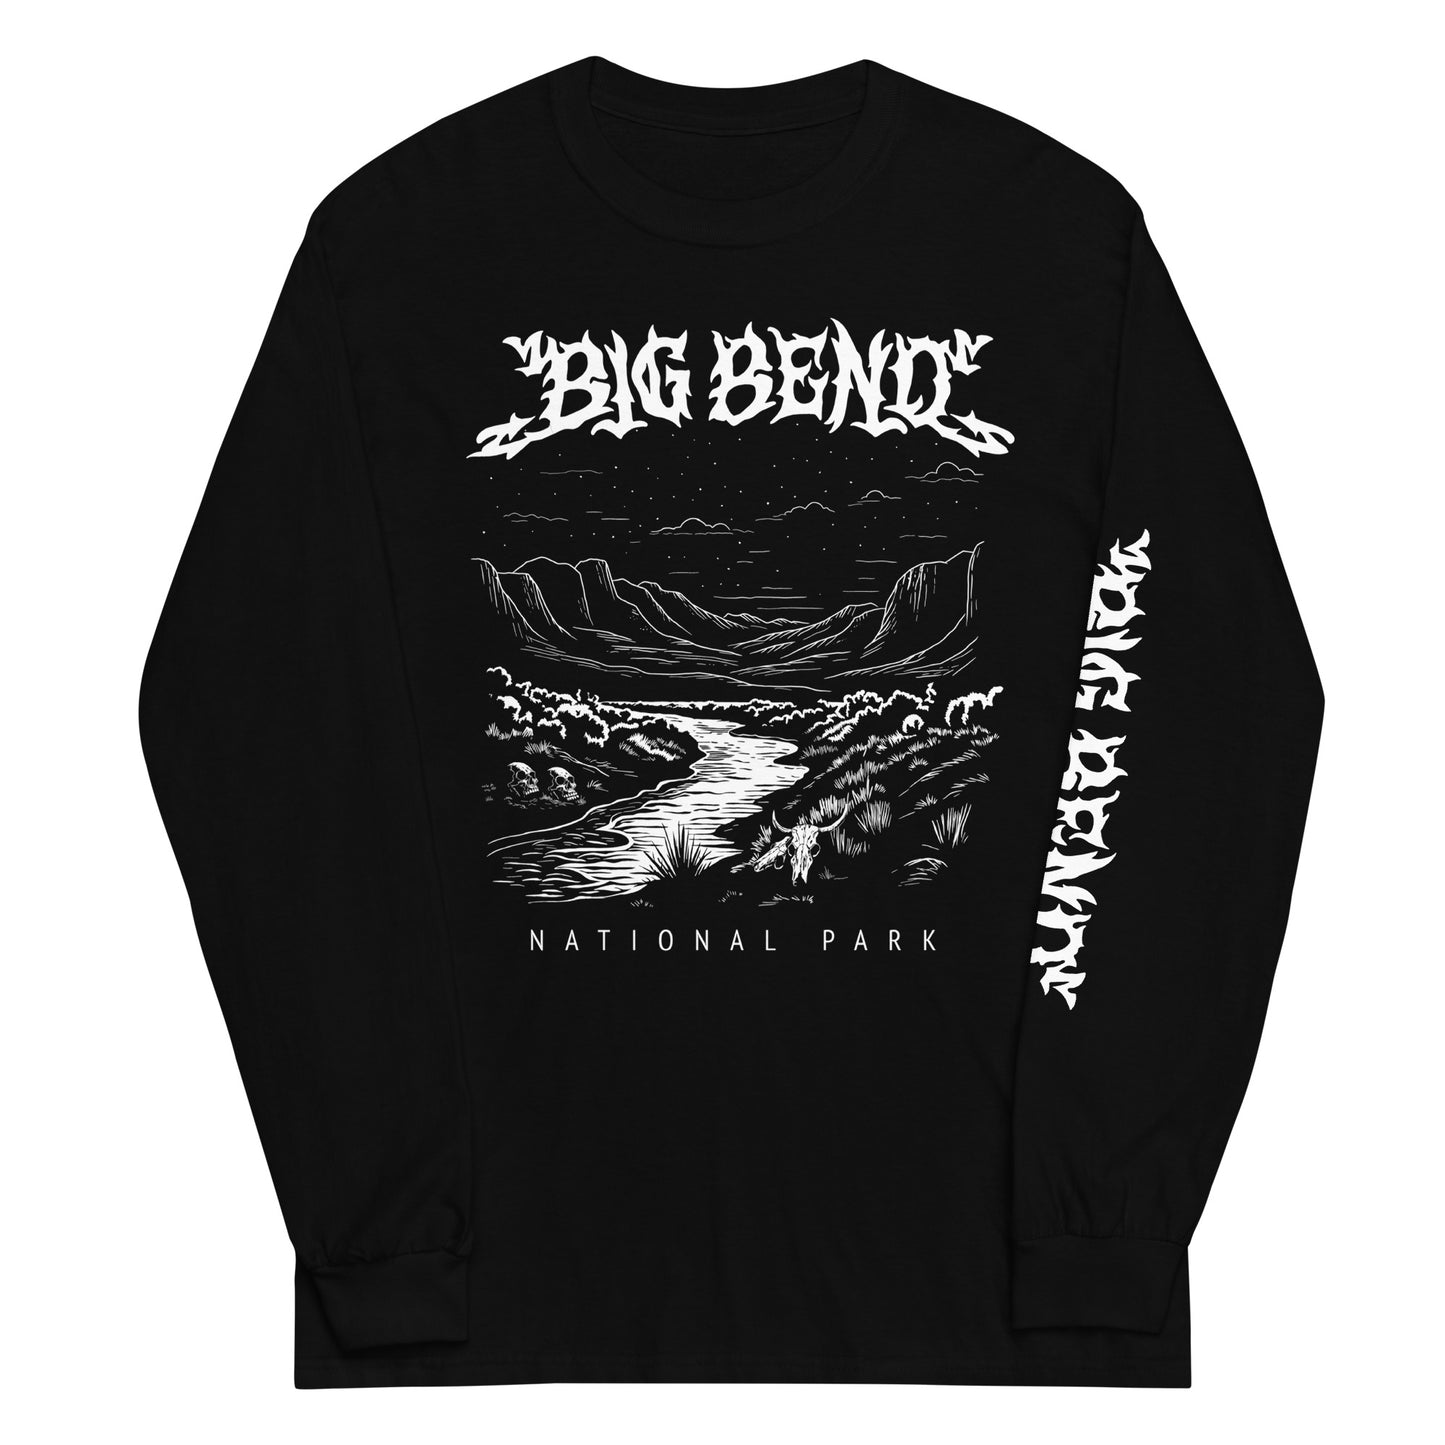 Big Bend National Park Death Metal Black Long Sleeve T-Shirt